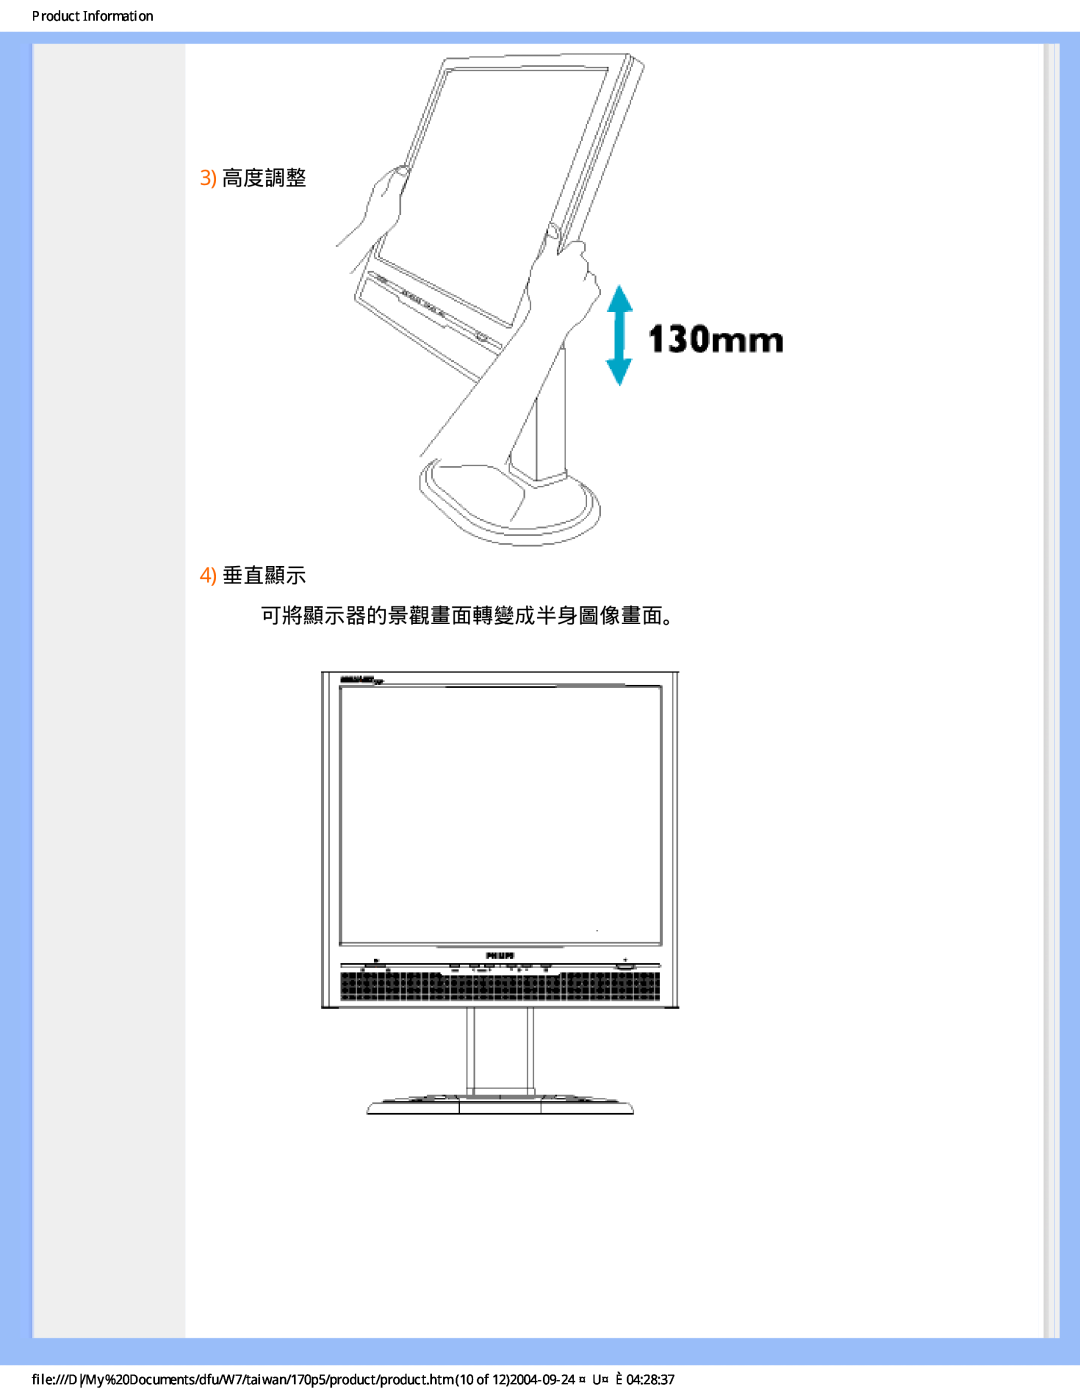 Philips 170p5 user manual 3高度調整 4垂直顯示 可將顯示器的景觀畫面轉變成半身圖像畫面。, Product Information 